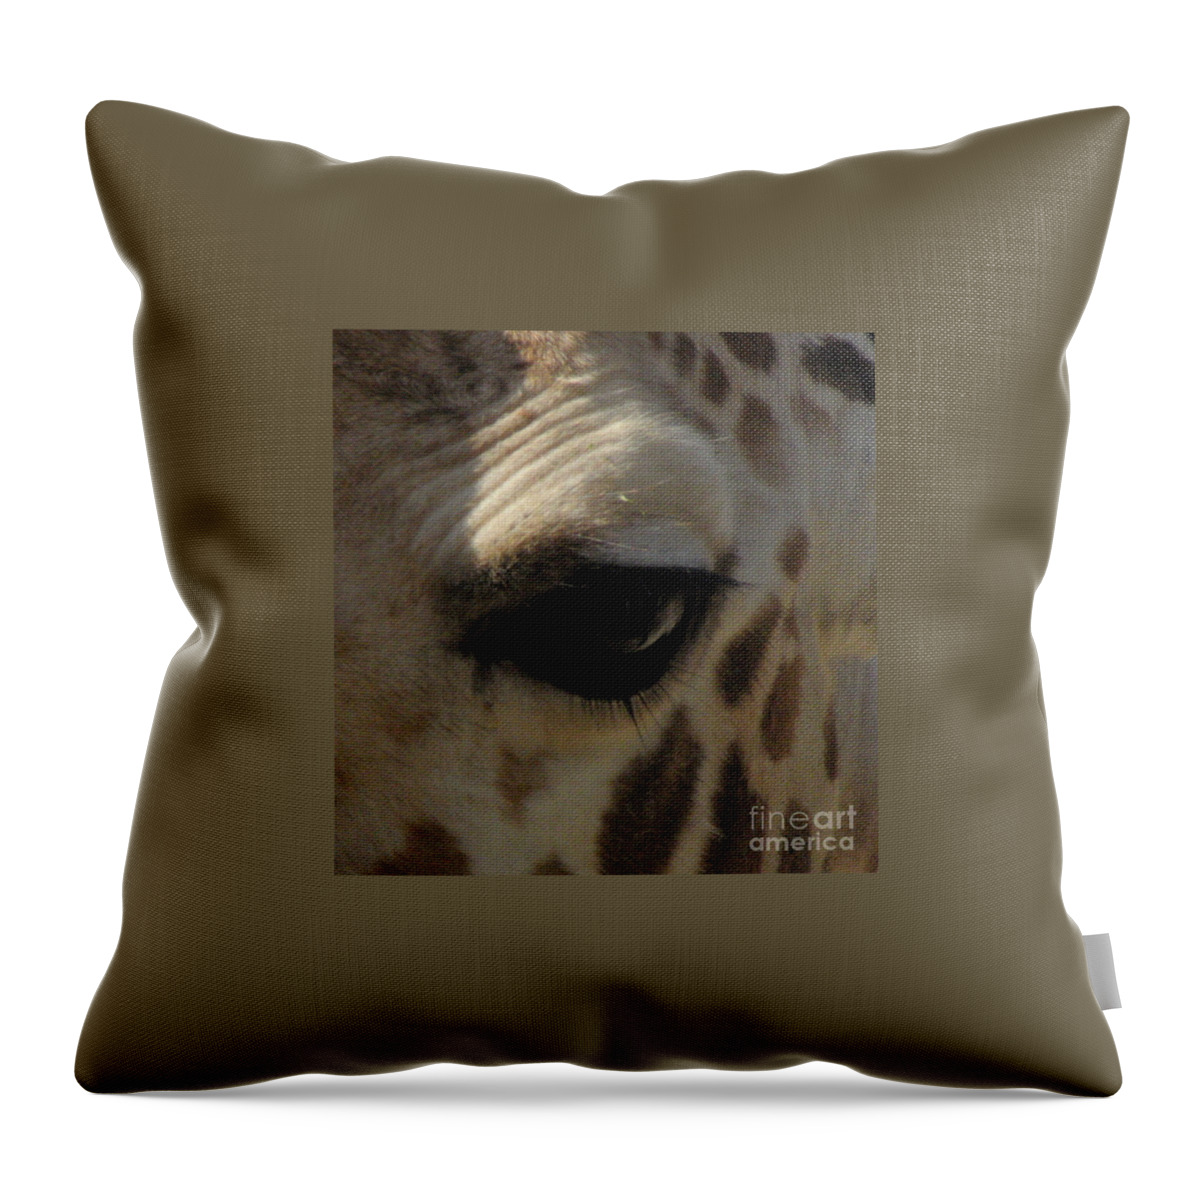 Giraffe Eye Throw Pillow featuring the photograph Giraffe eye by Kim Galluzzo Wozniak